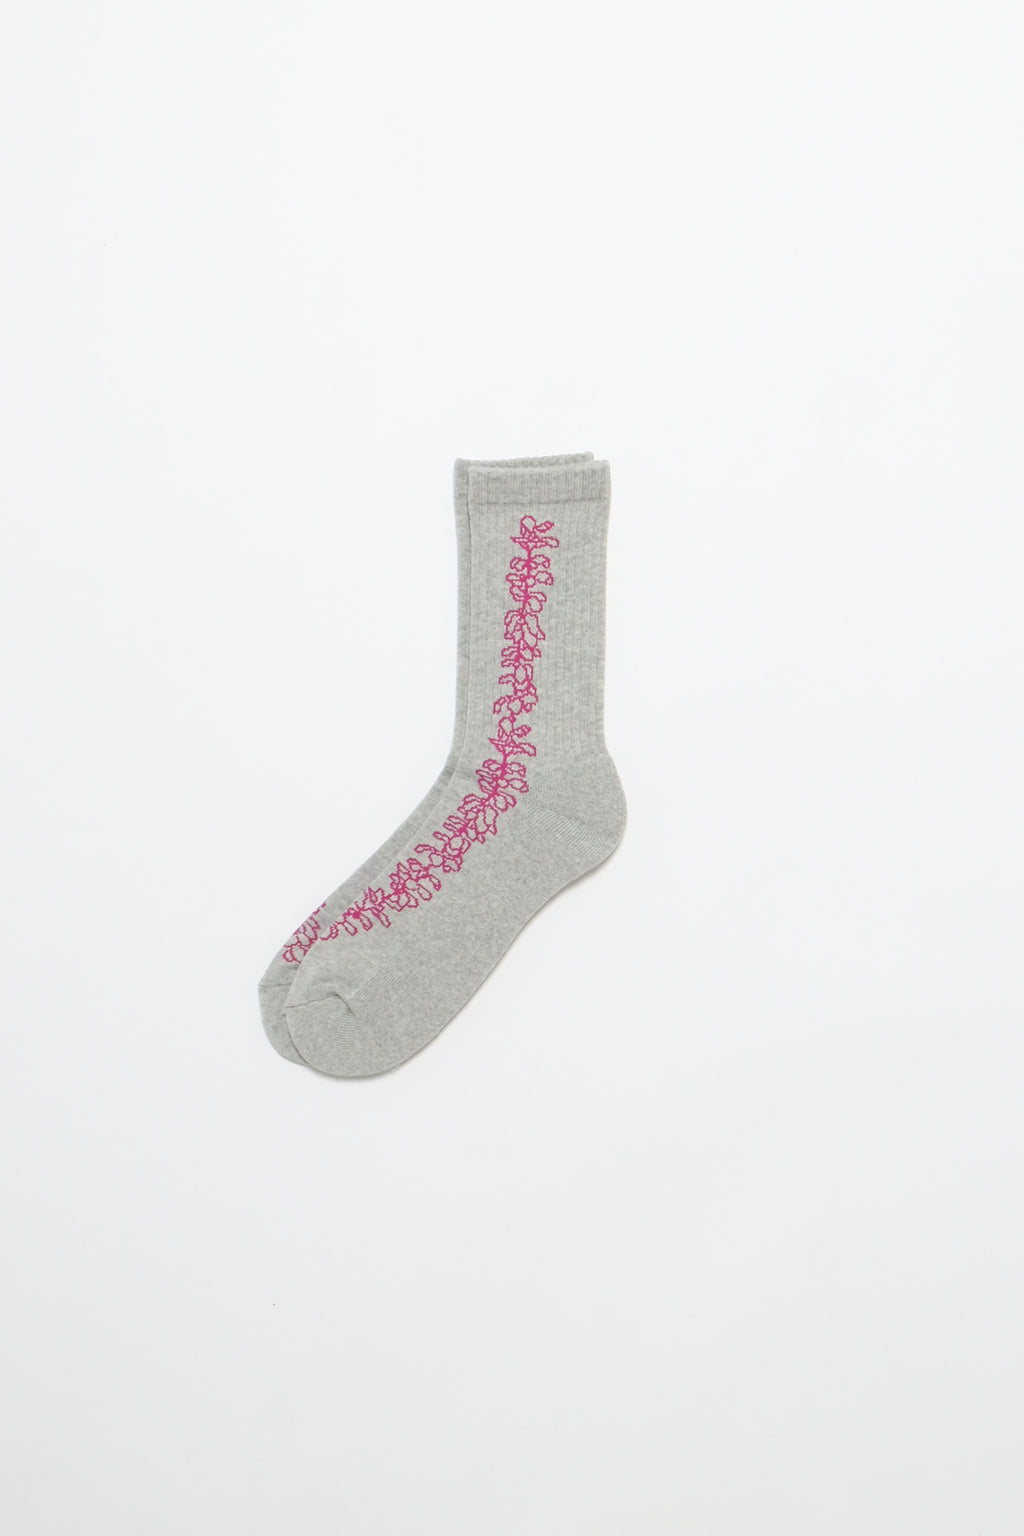 Socks - Pua - HeatherGrey/Magenta